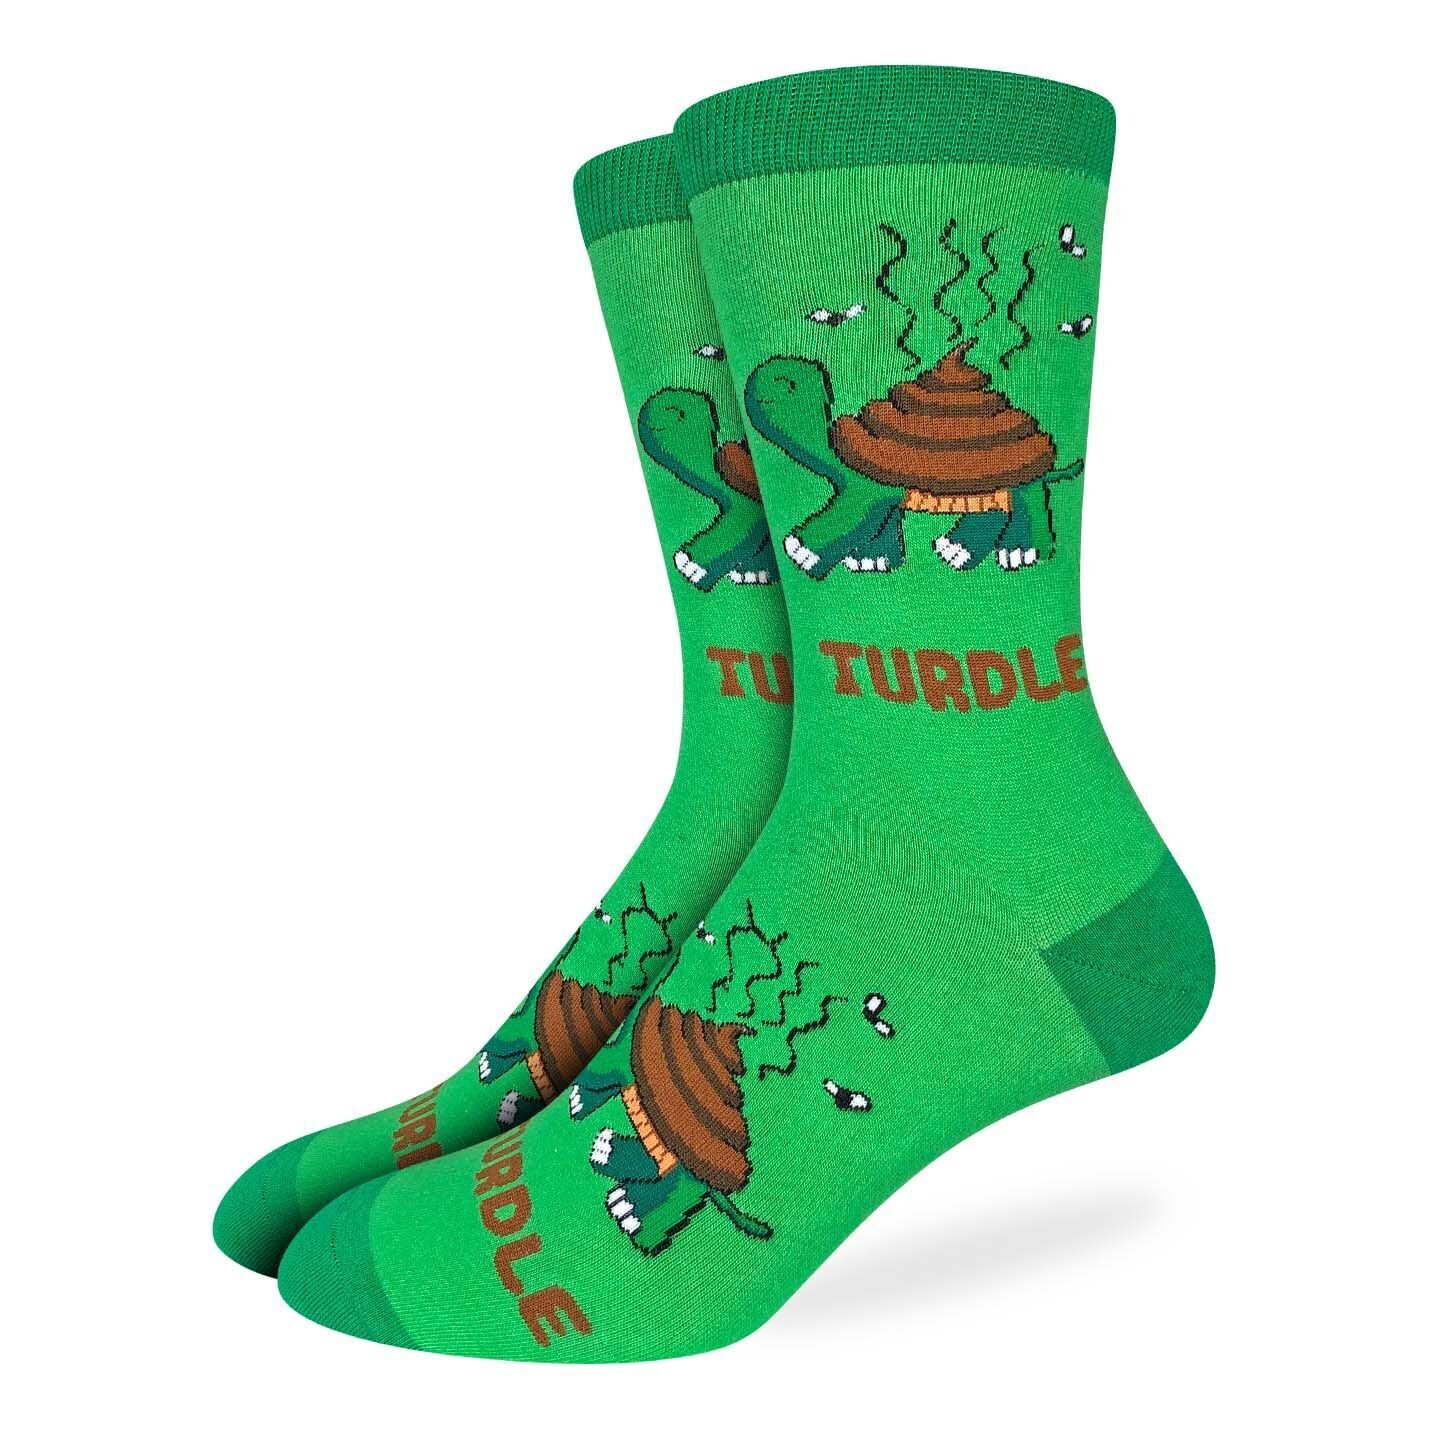 Turdle Turtle socks | M/L adult sizes | Good Luck Sock